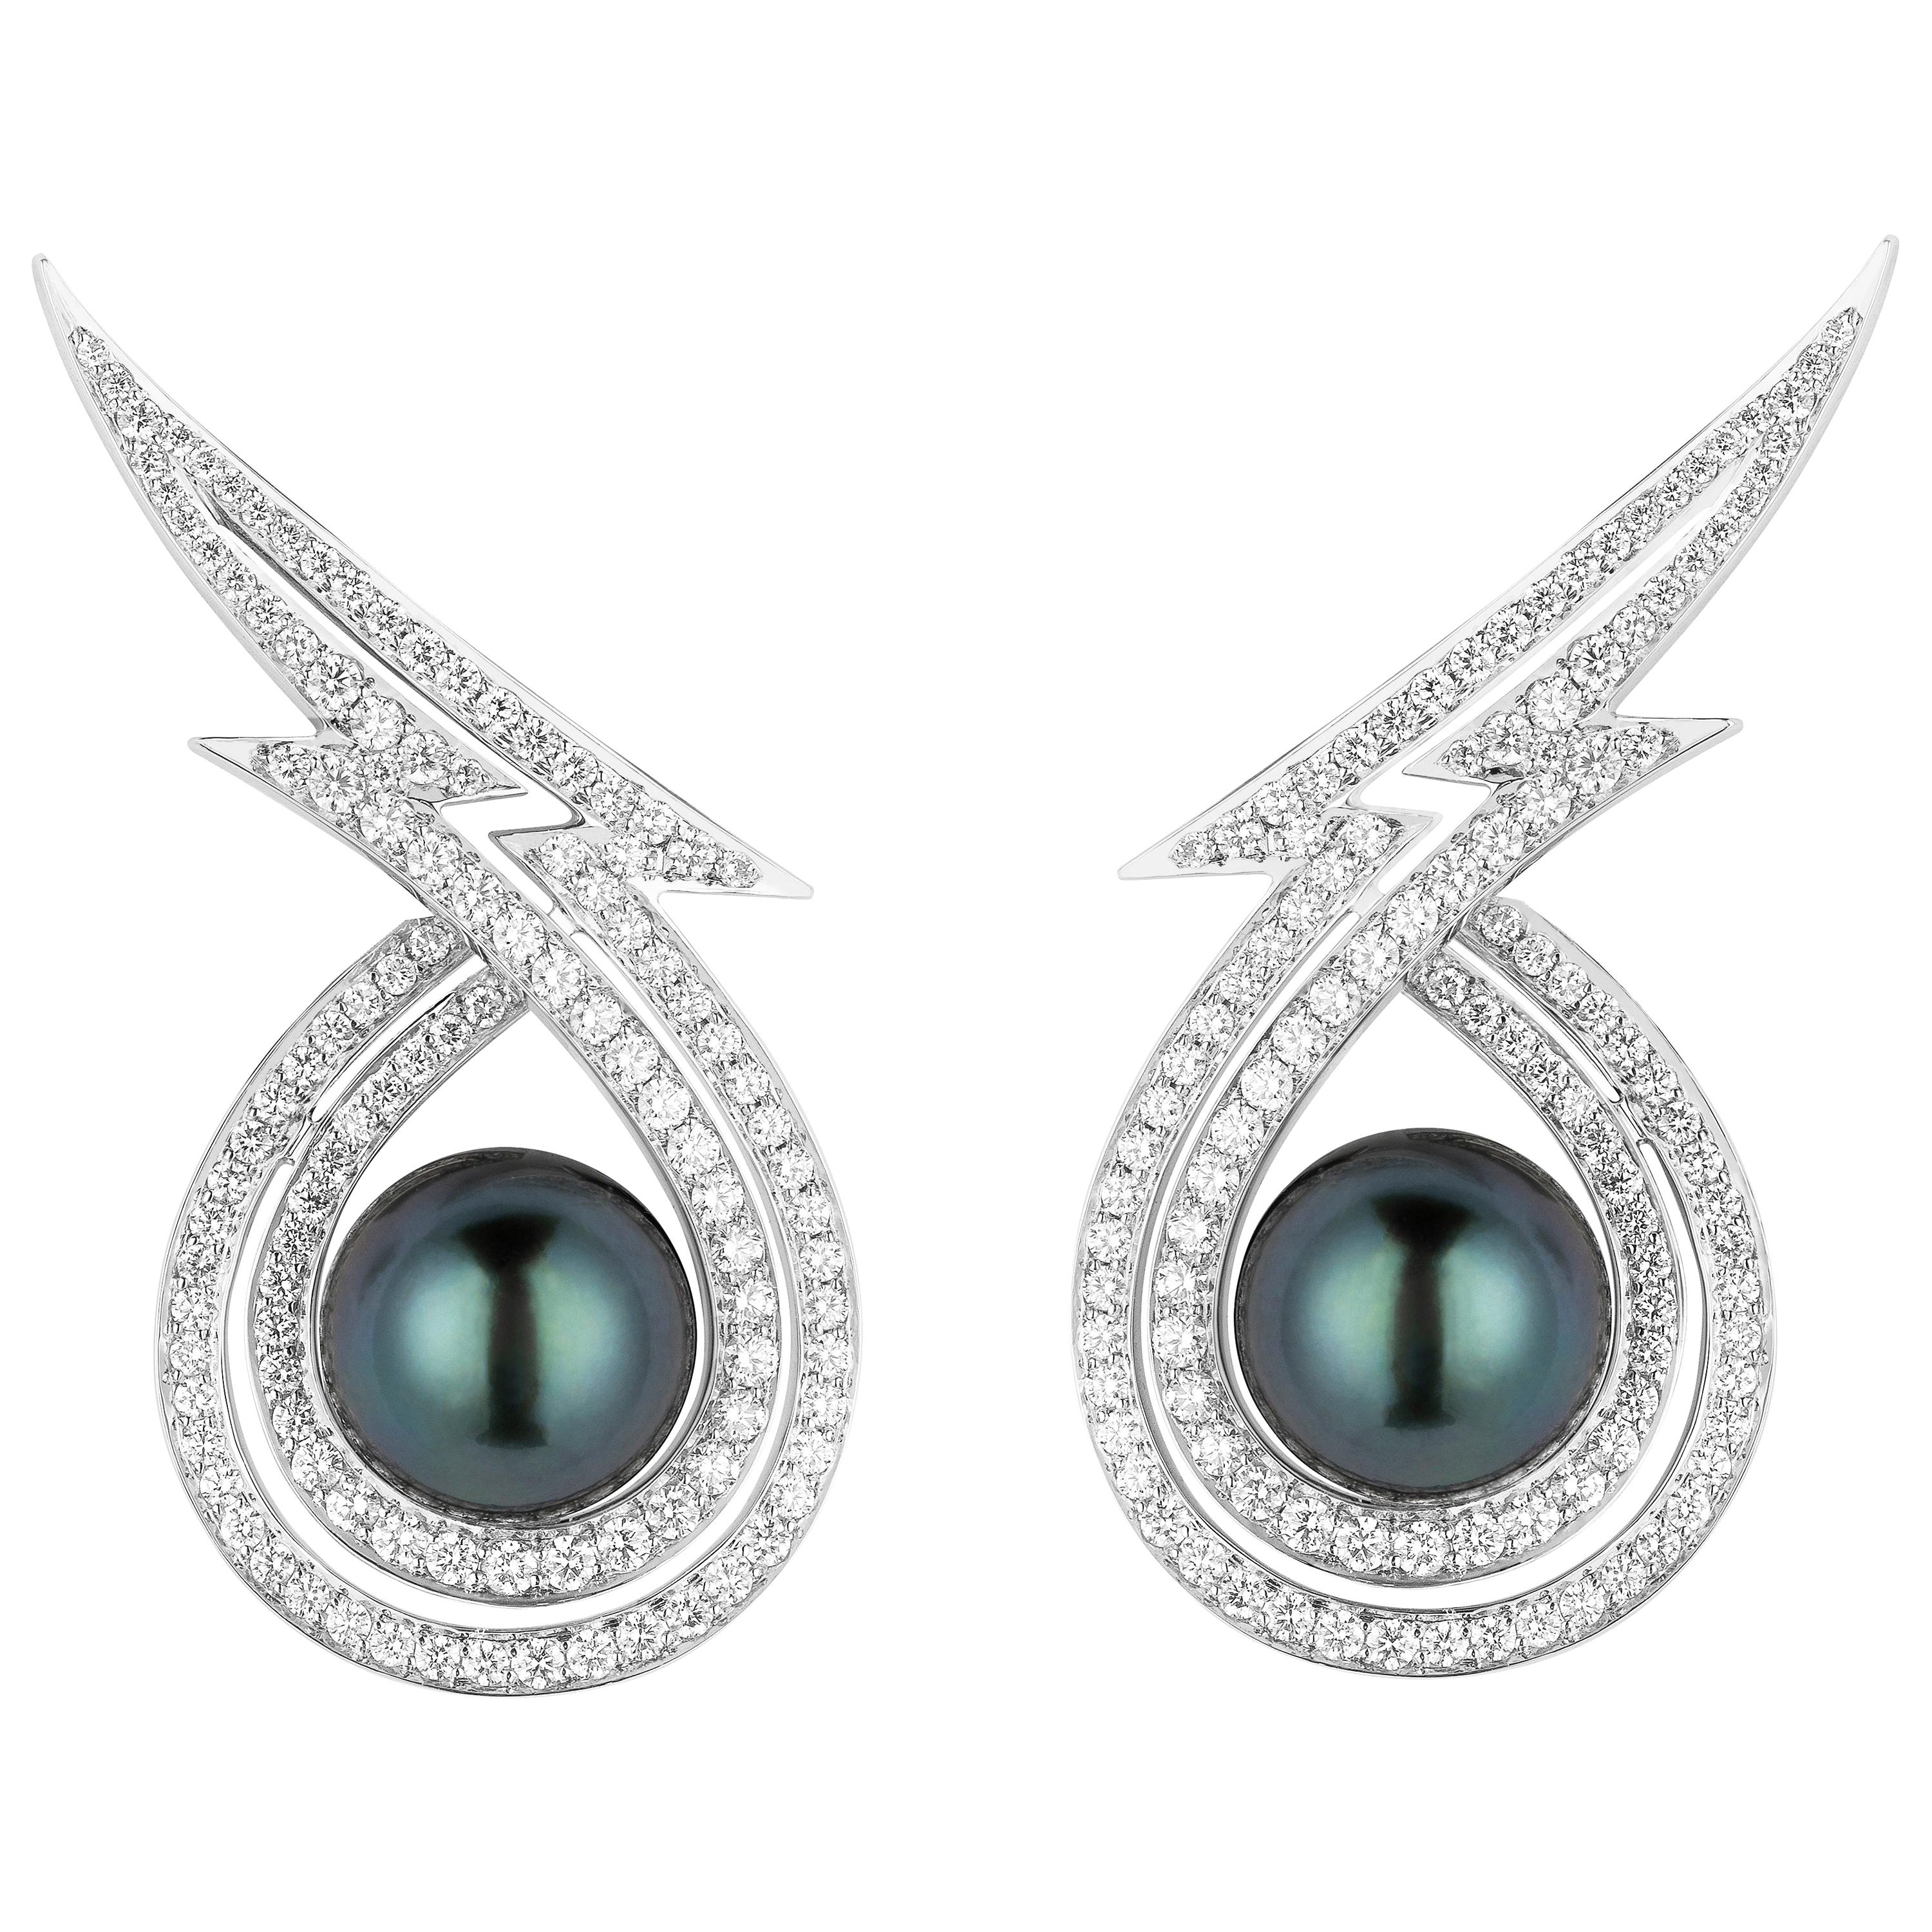 Stephen Webster Lady Stardust Tahitian Pearls and Diamond Earrings